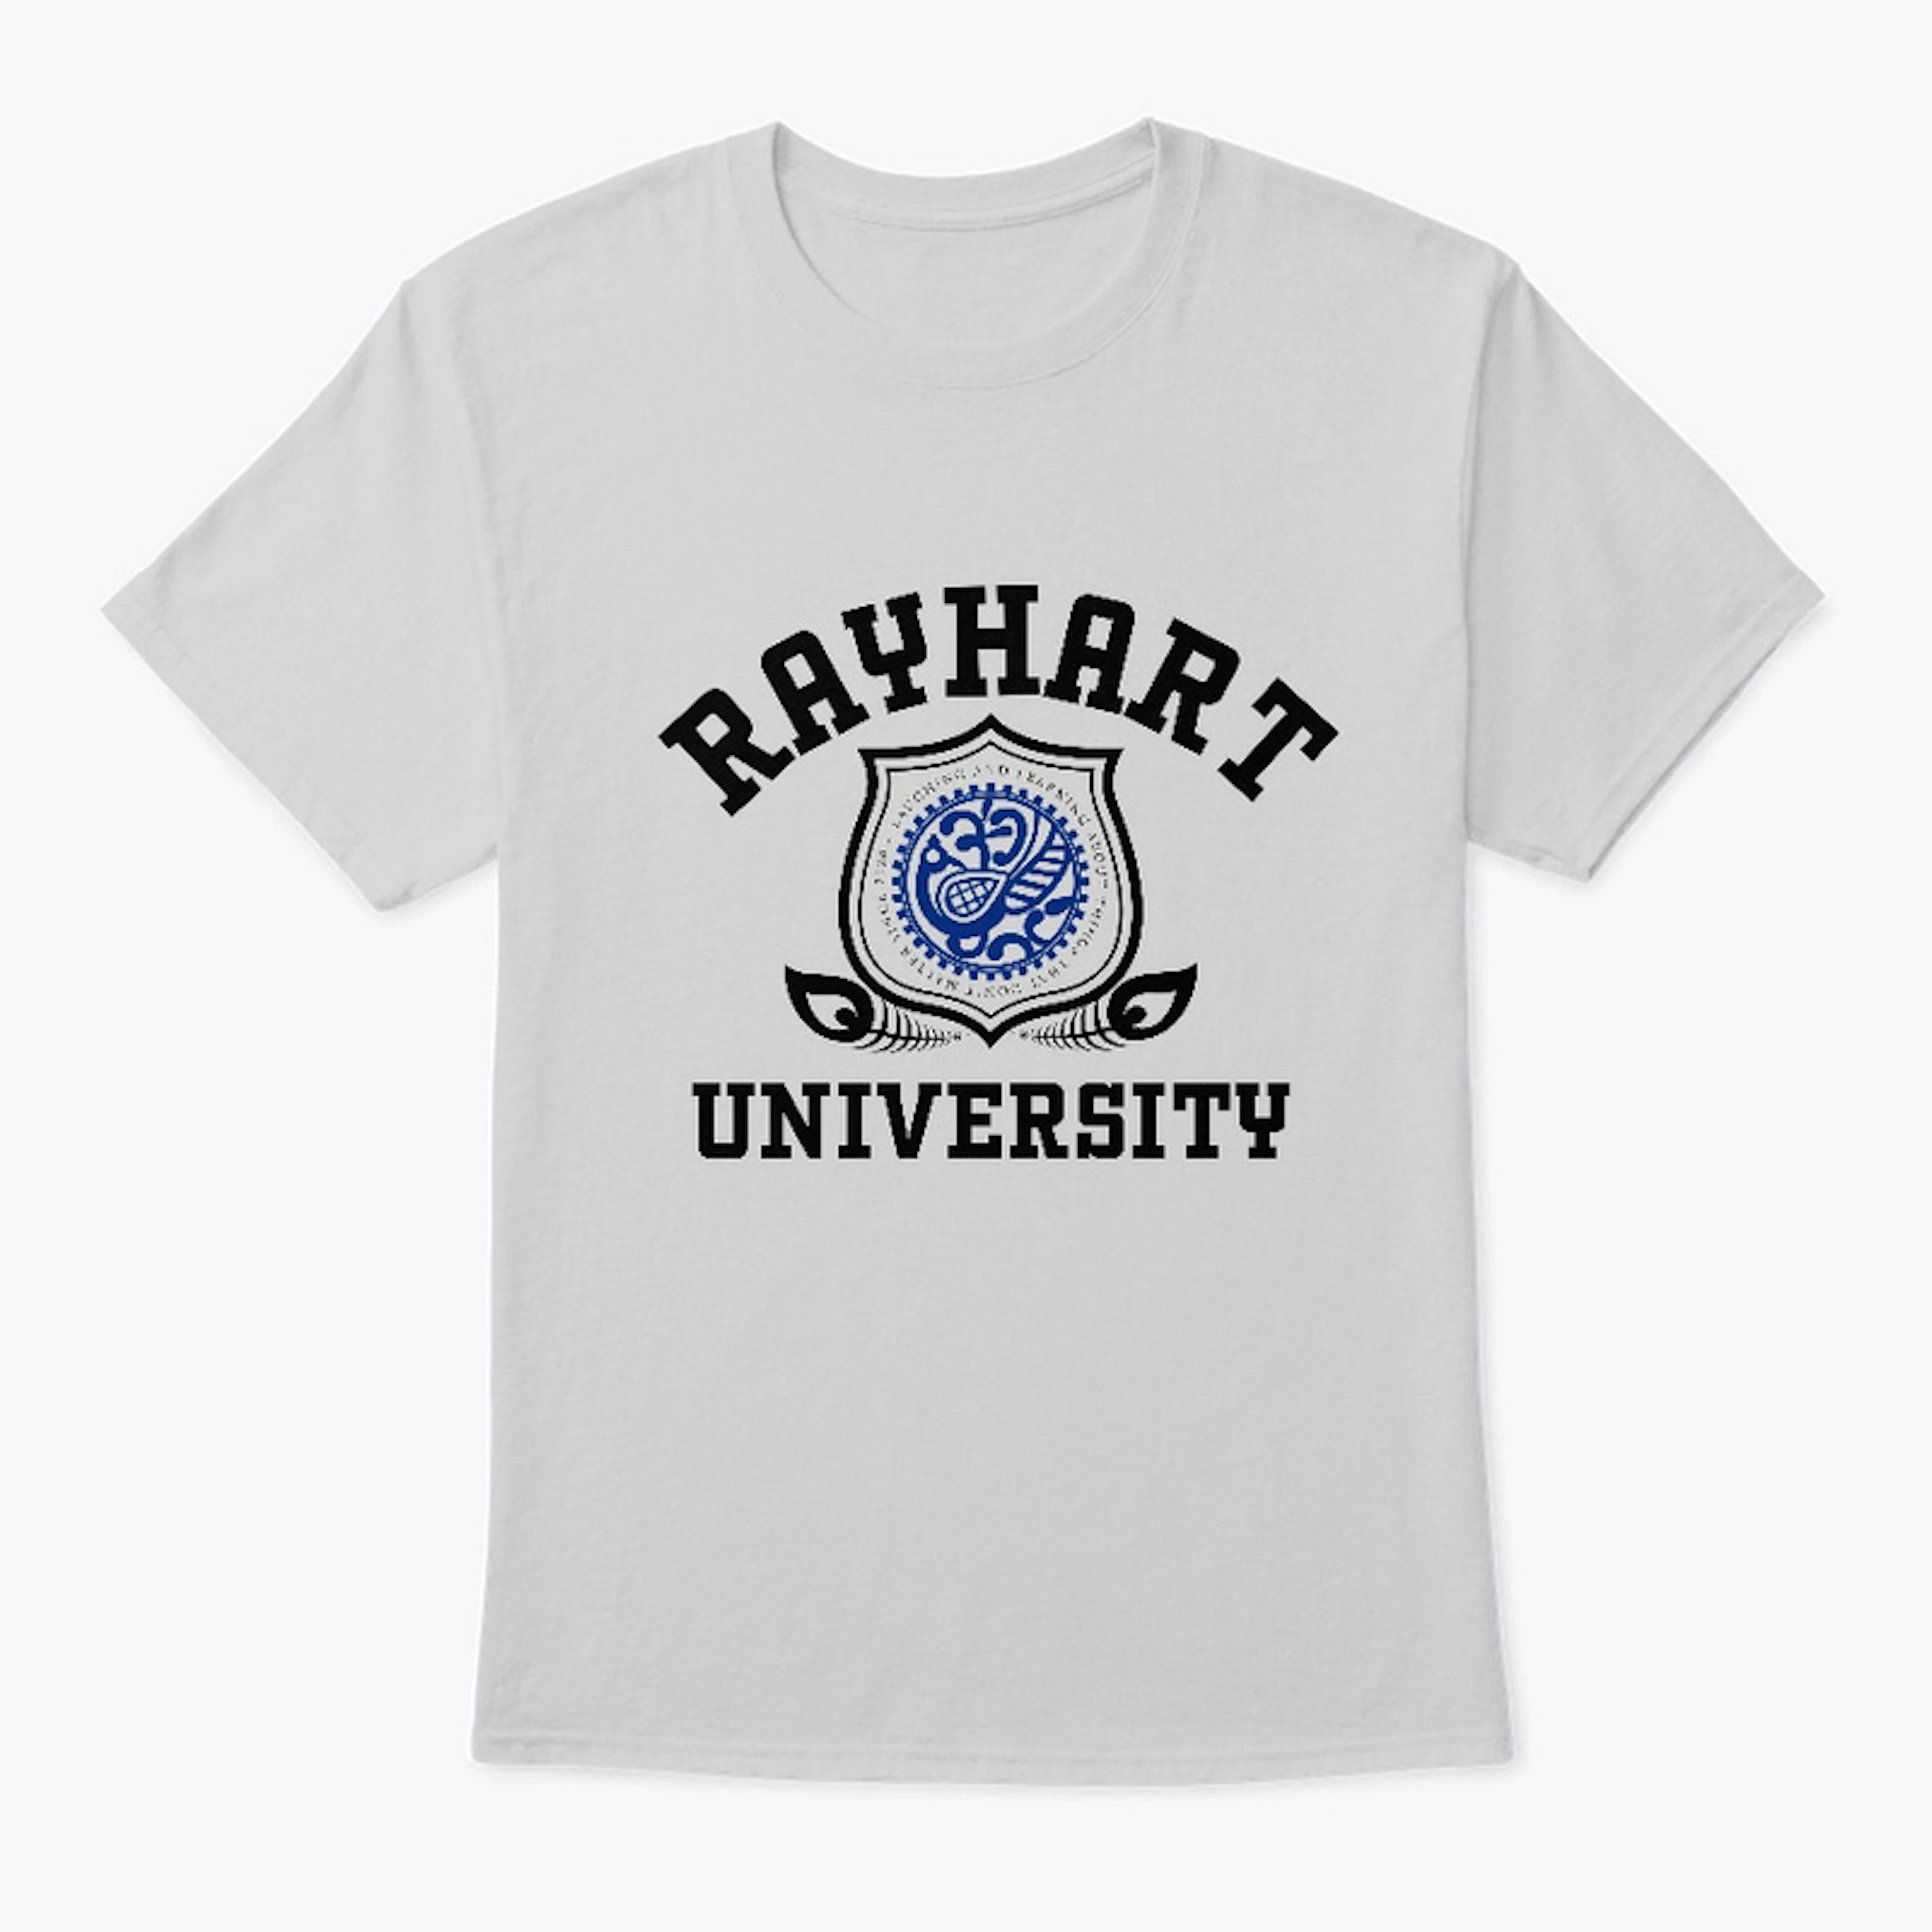 Rayhart University Gear